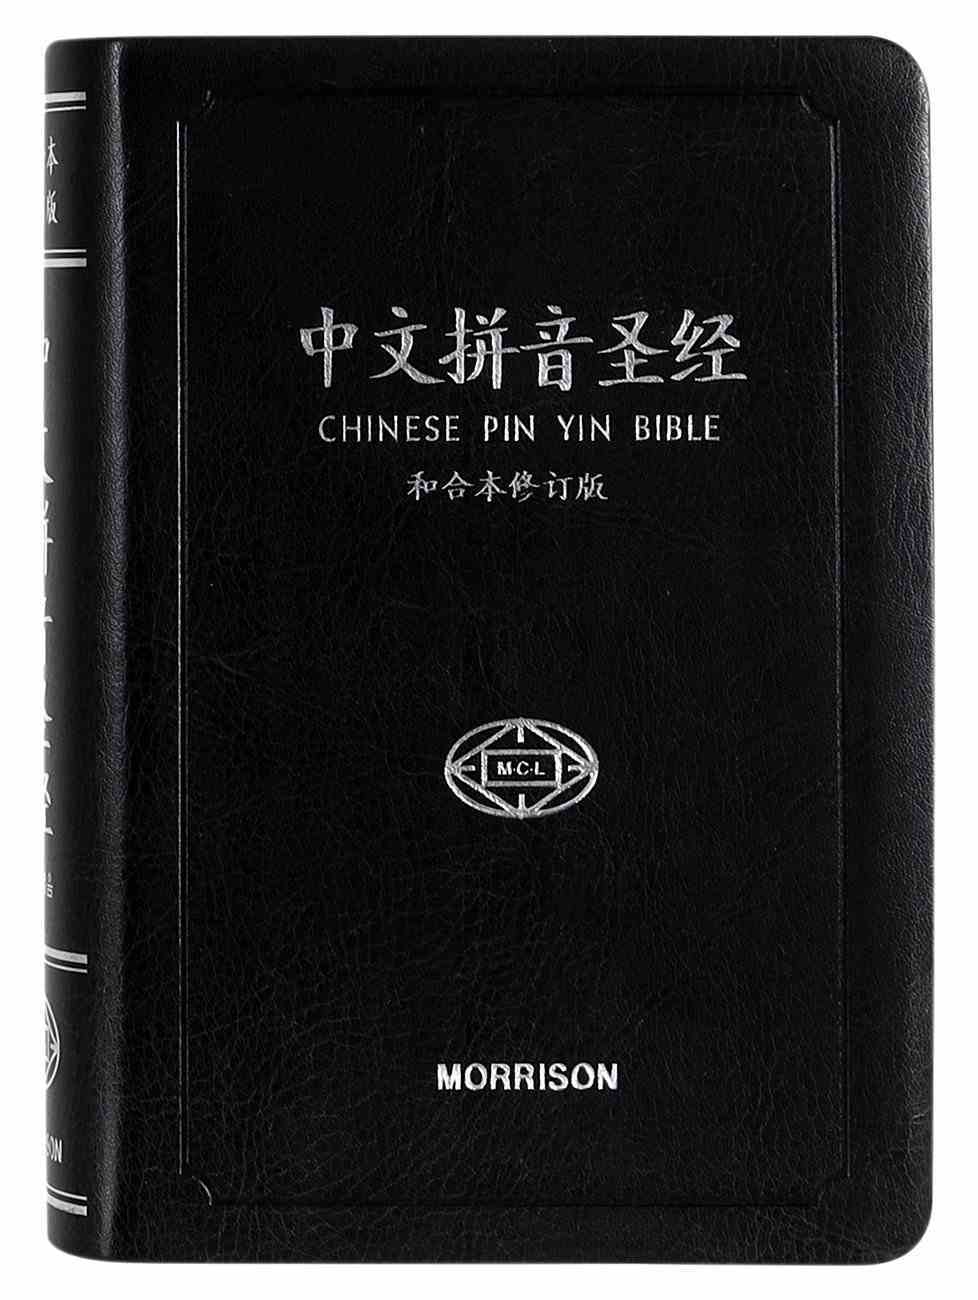 Cunp Chinese Union New Punctuation Pin Yin Bible Vinyl